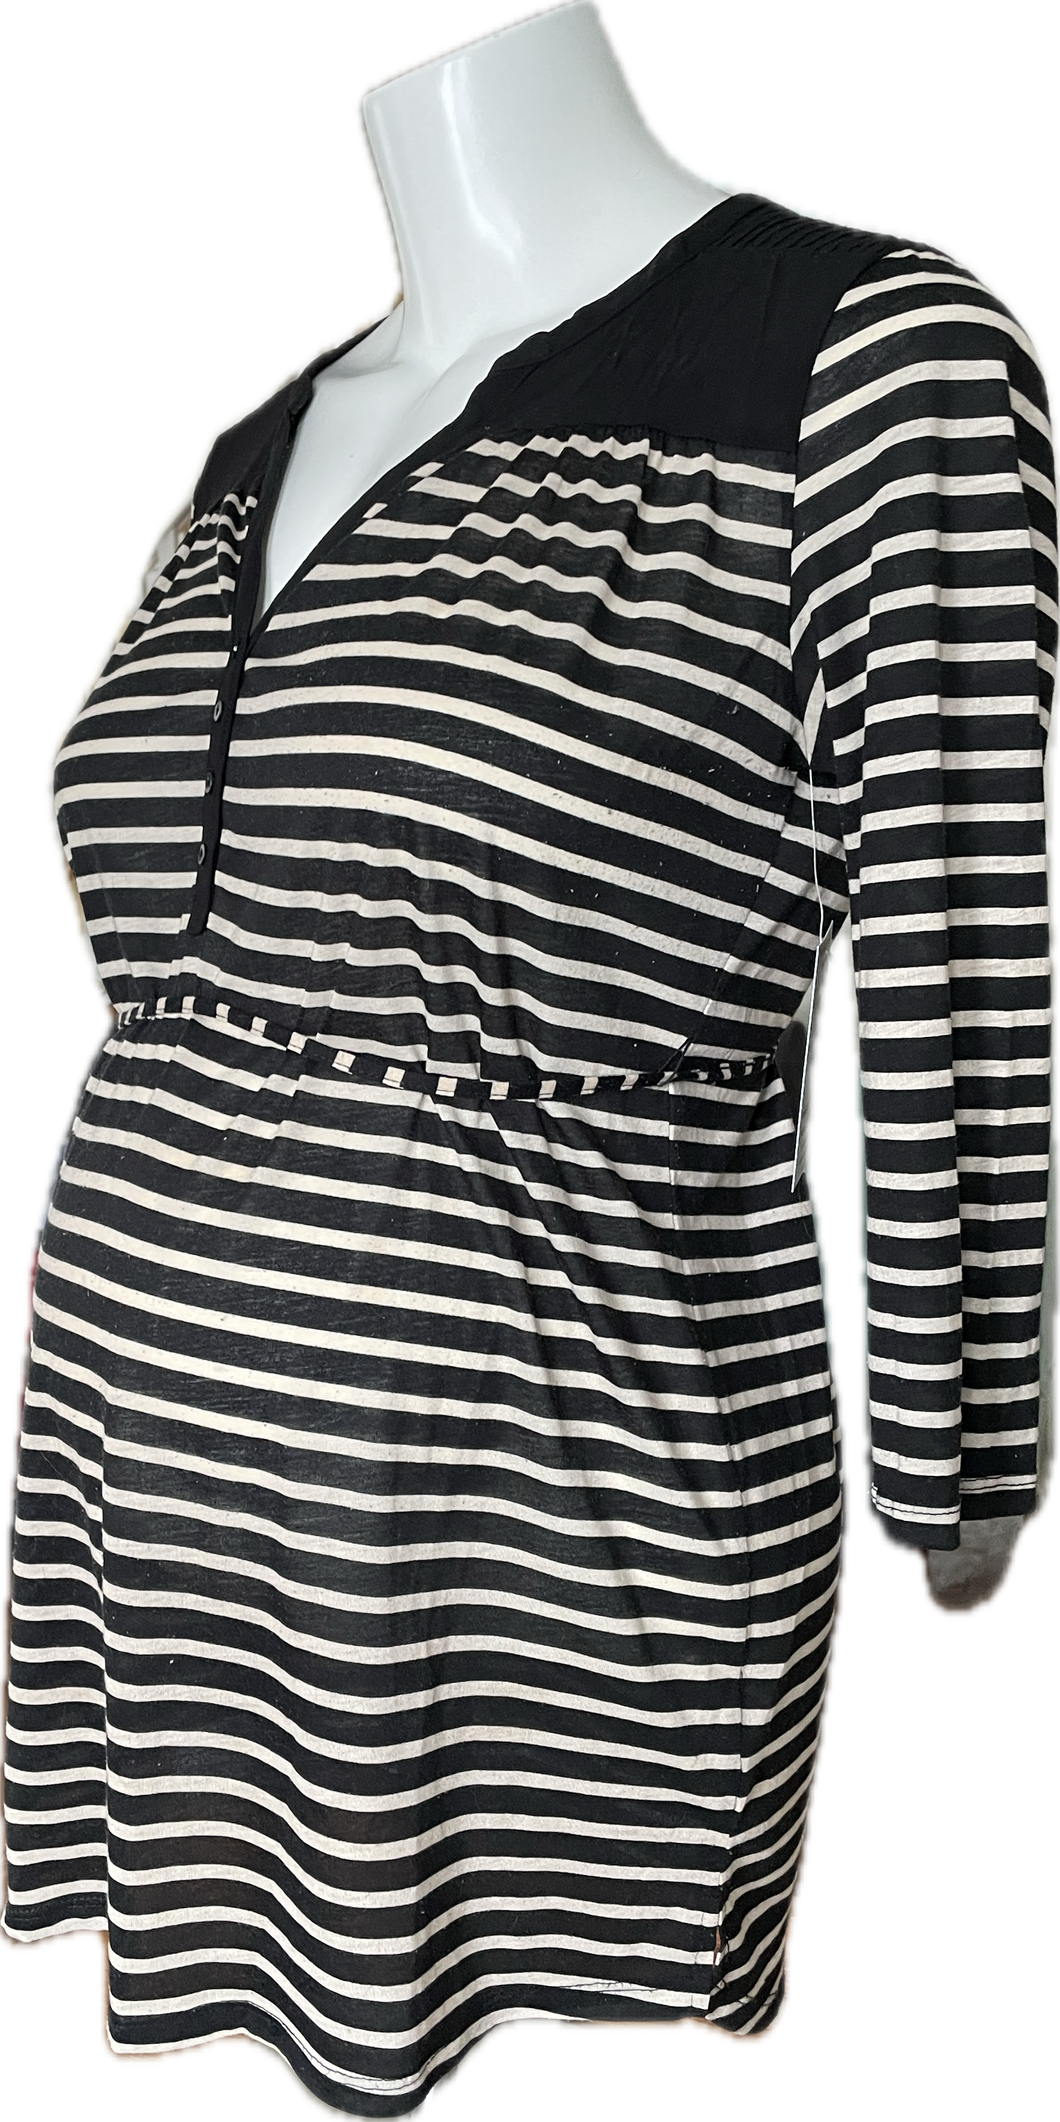 S H&M Mama 3/4 SLeeve Top in Beige & Black Stripe